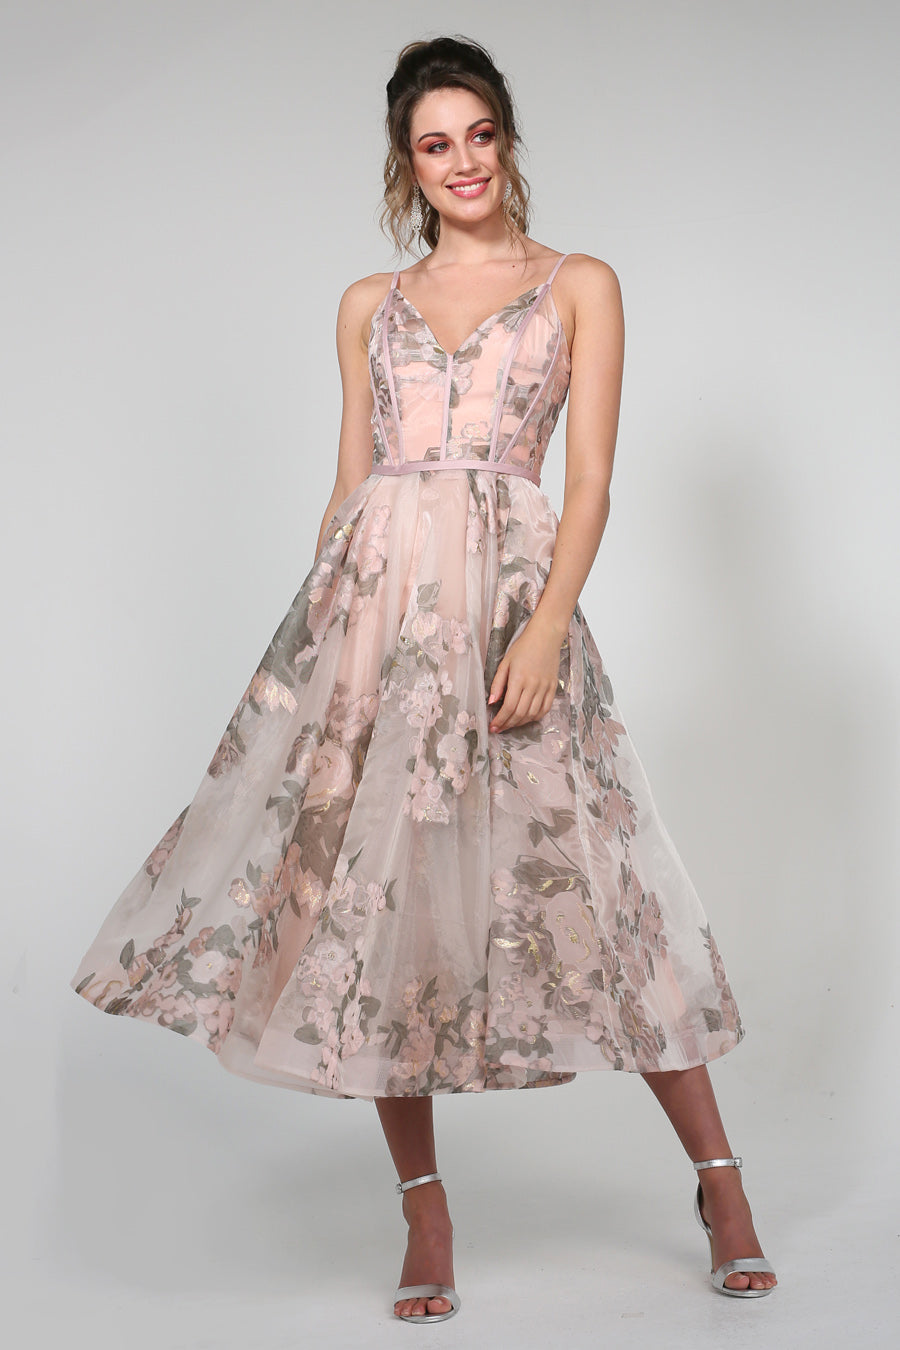 Tina Holly Couture Designer TA815 Pink Floral Mesh Tea Dress Tina Holly Couture$ AfterPay Humm ZipPay LayBuy Sezzle